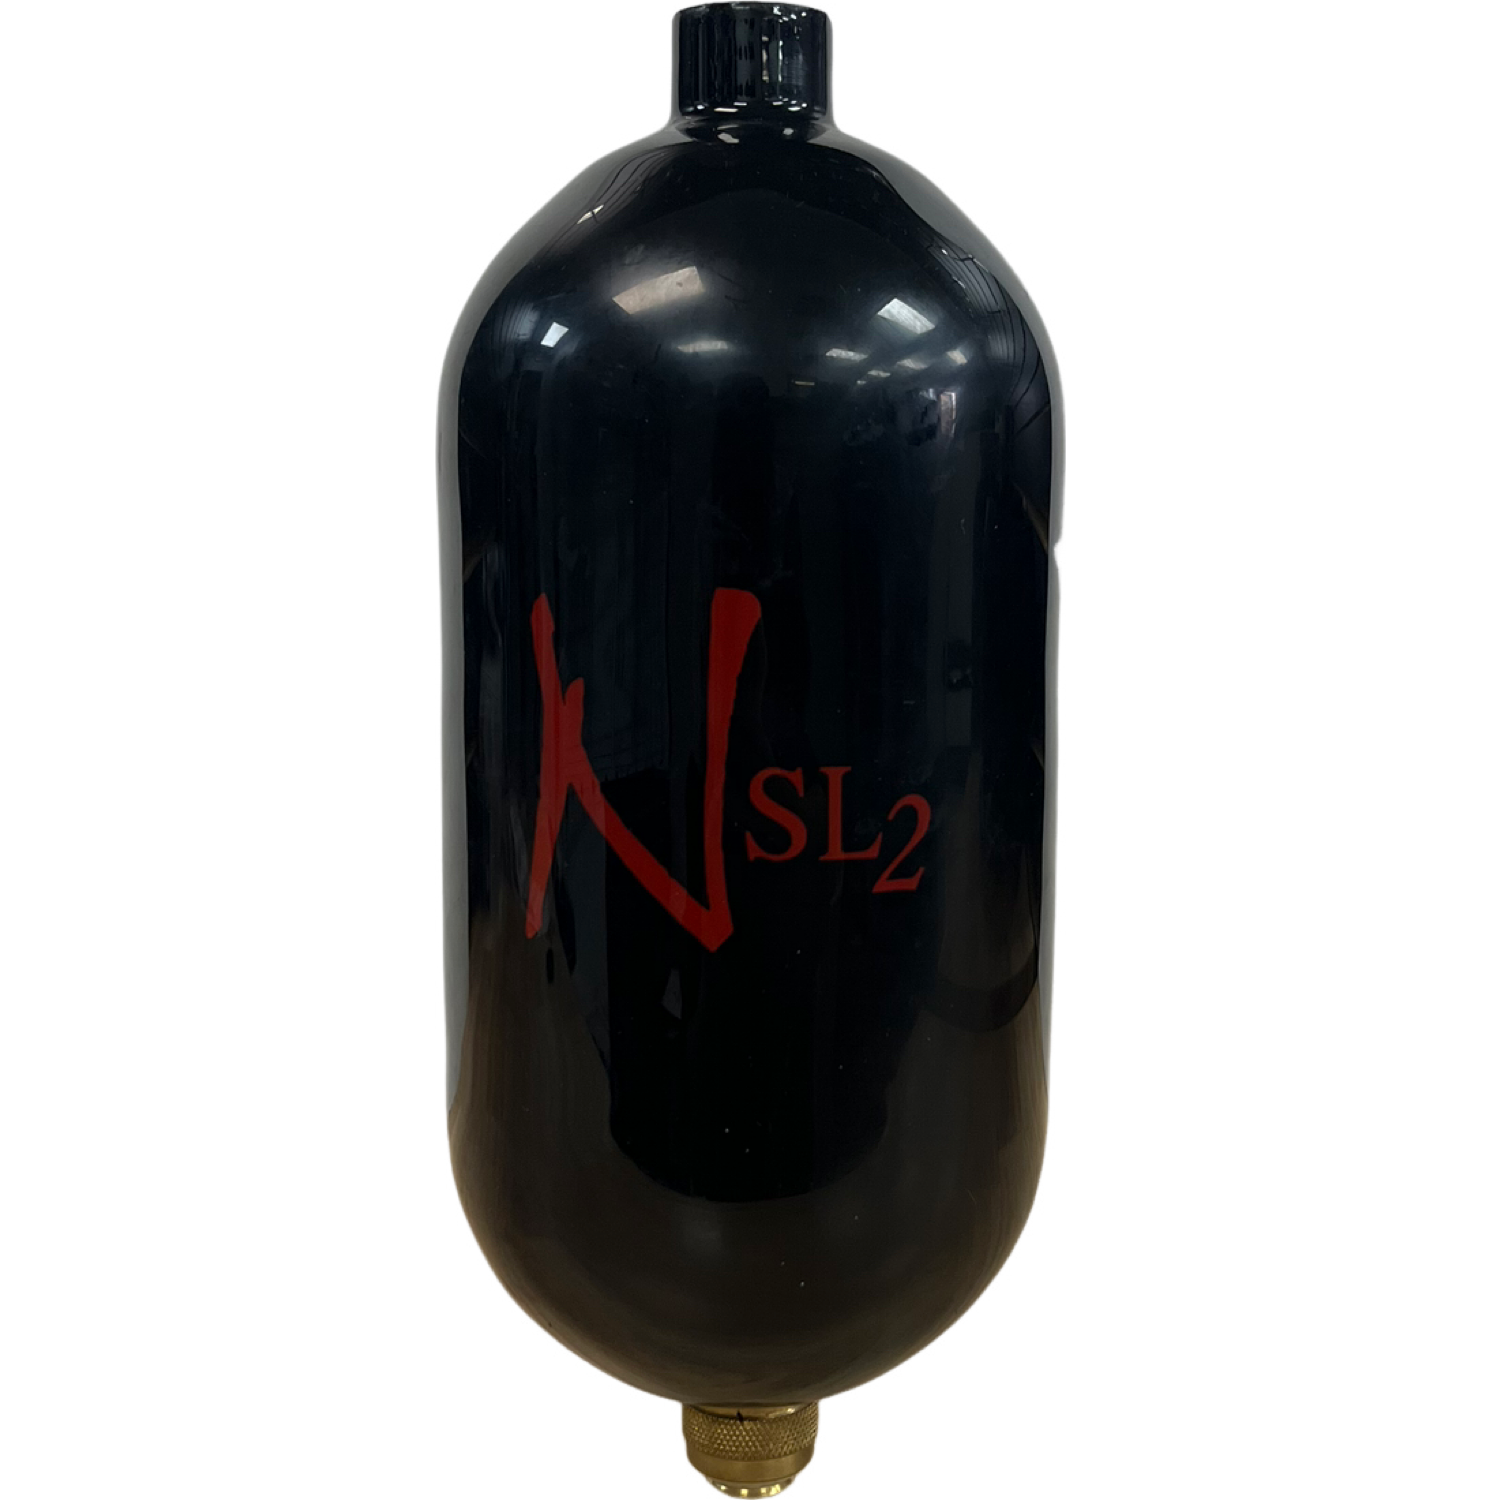 Ninja SL2 77/4500 (Used) - Bottle Only - Black/Red